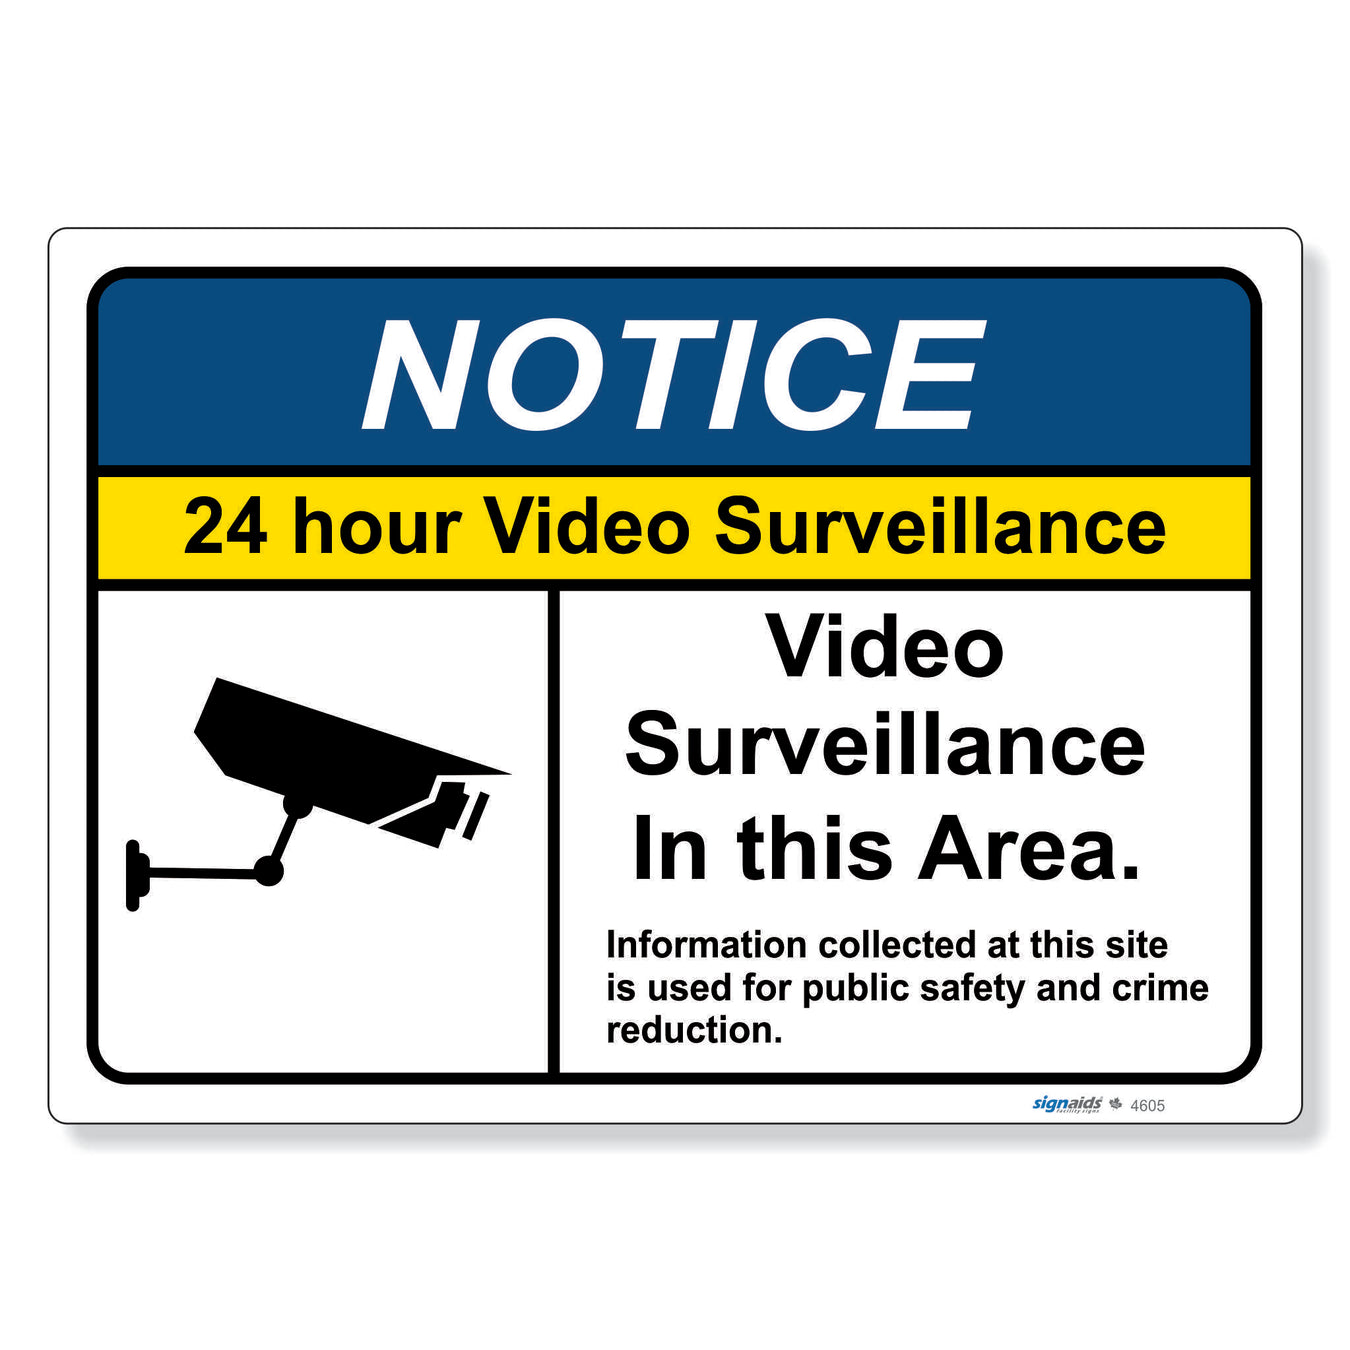 Security Video surveillance